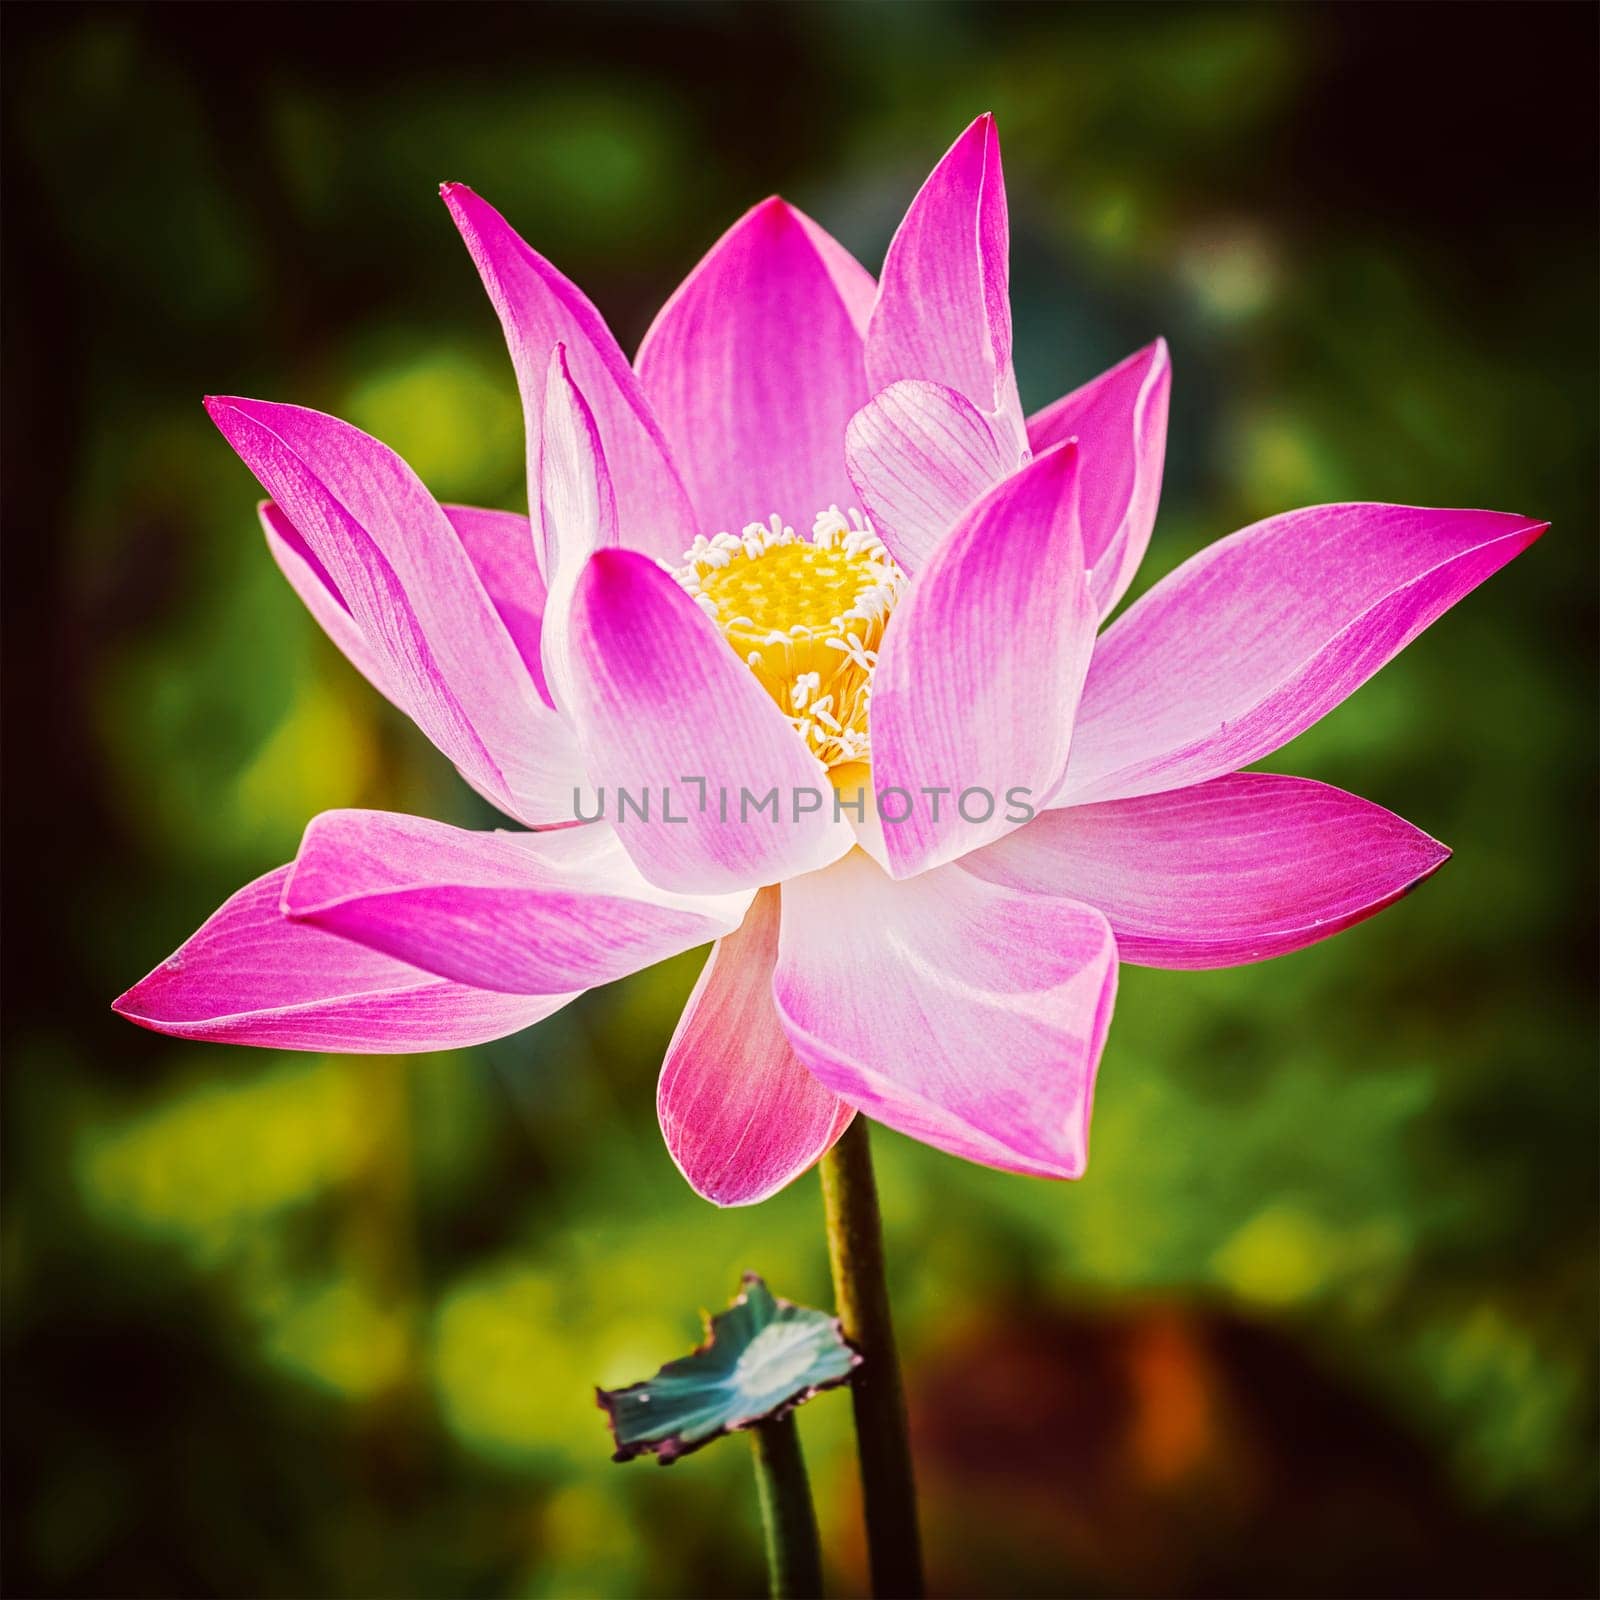 Lotus close up by dimol